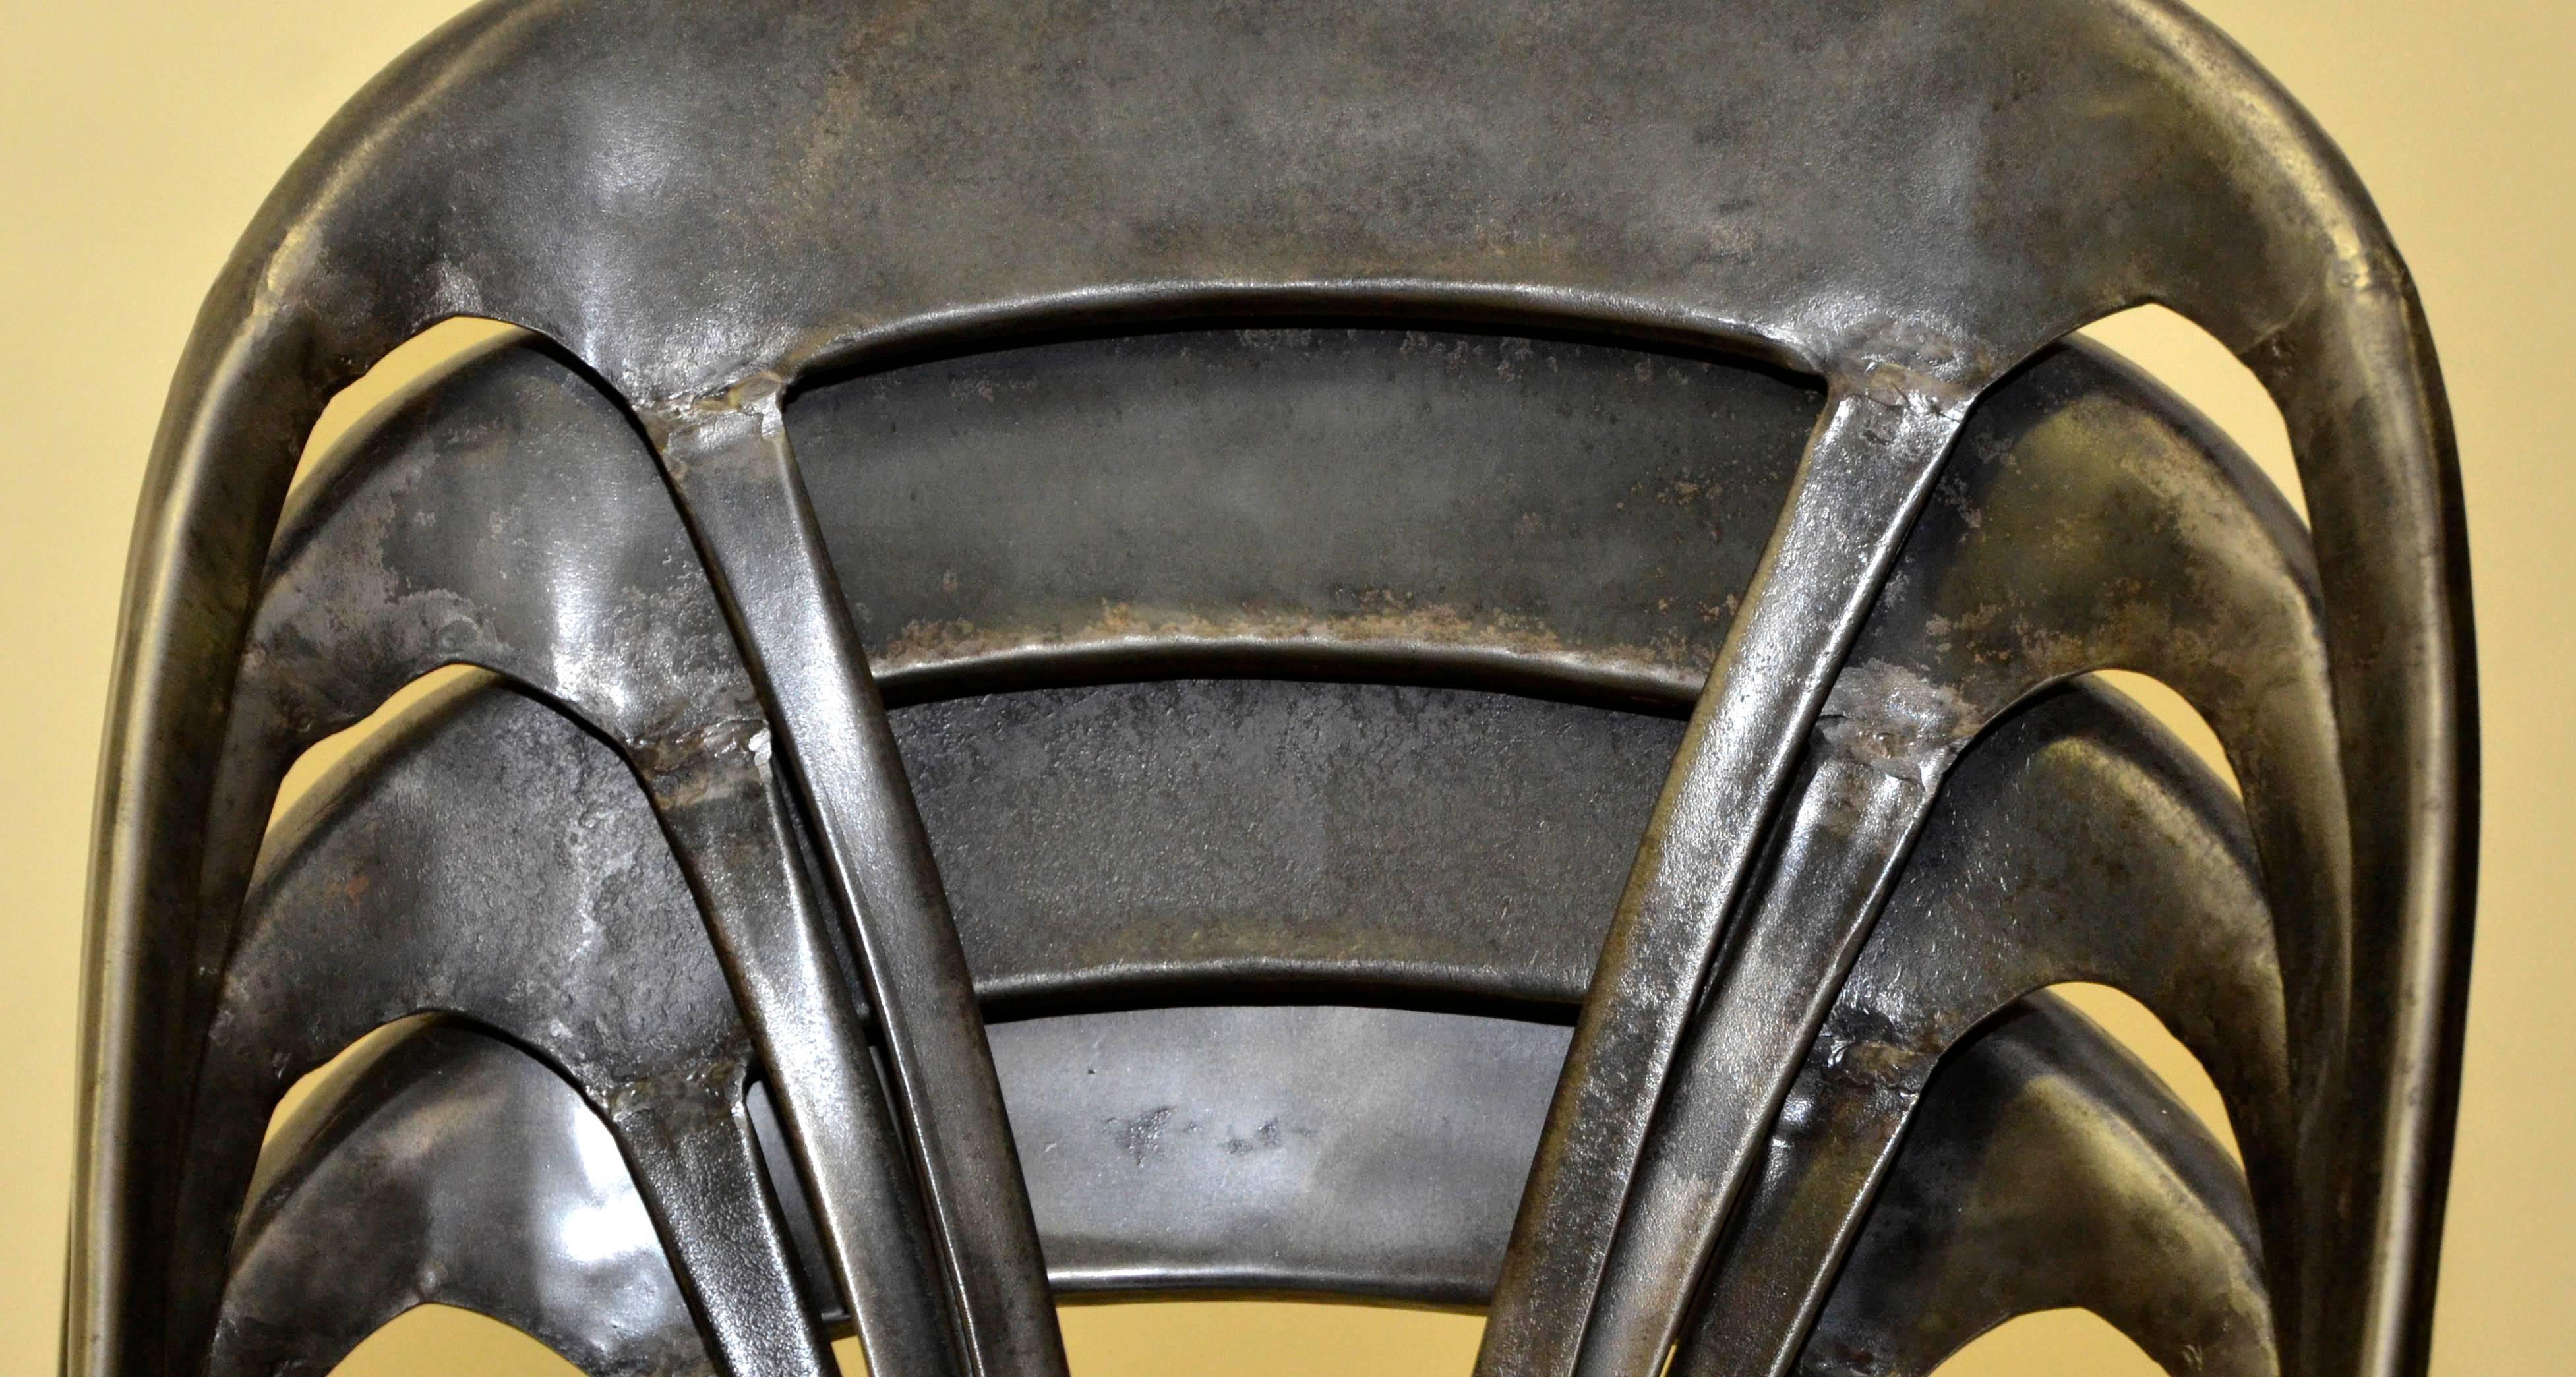 vintage metal stacking chairs